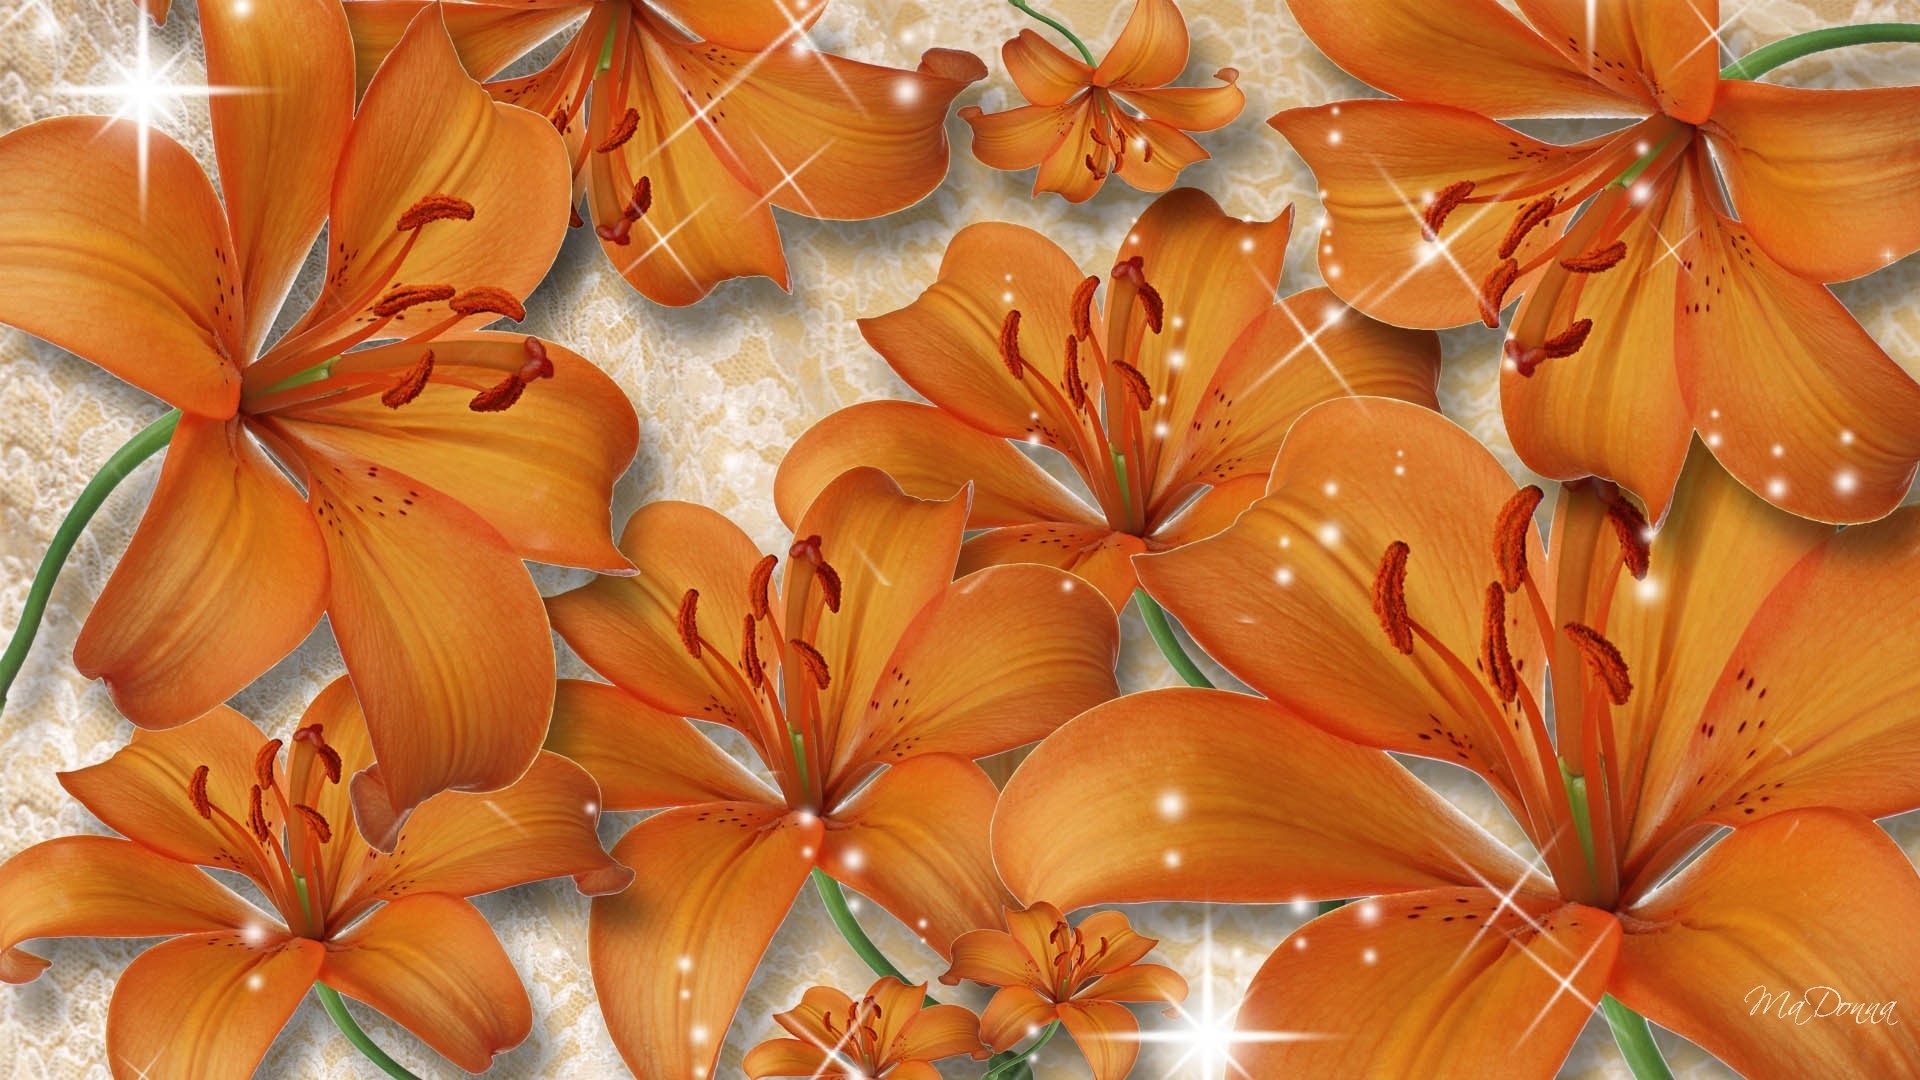 Tiger Lily Wallpaper.